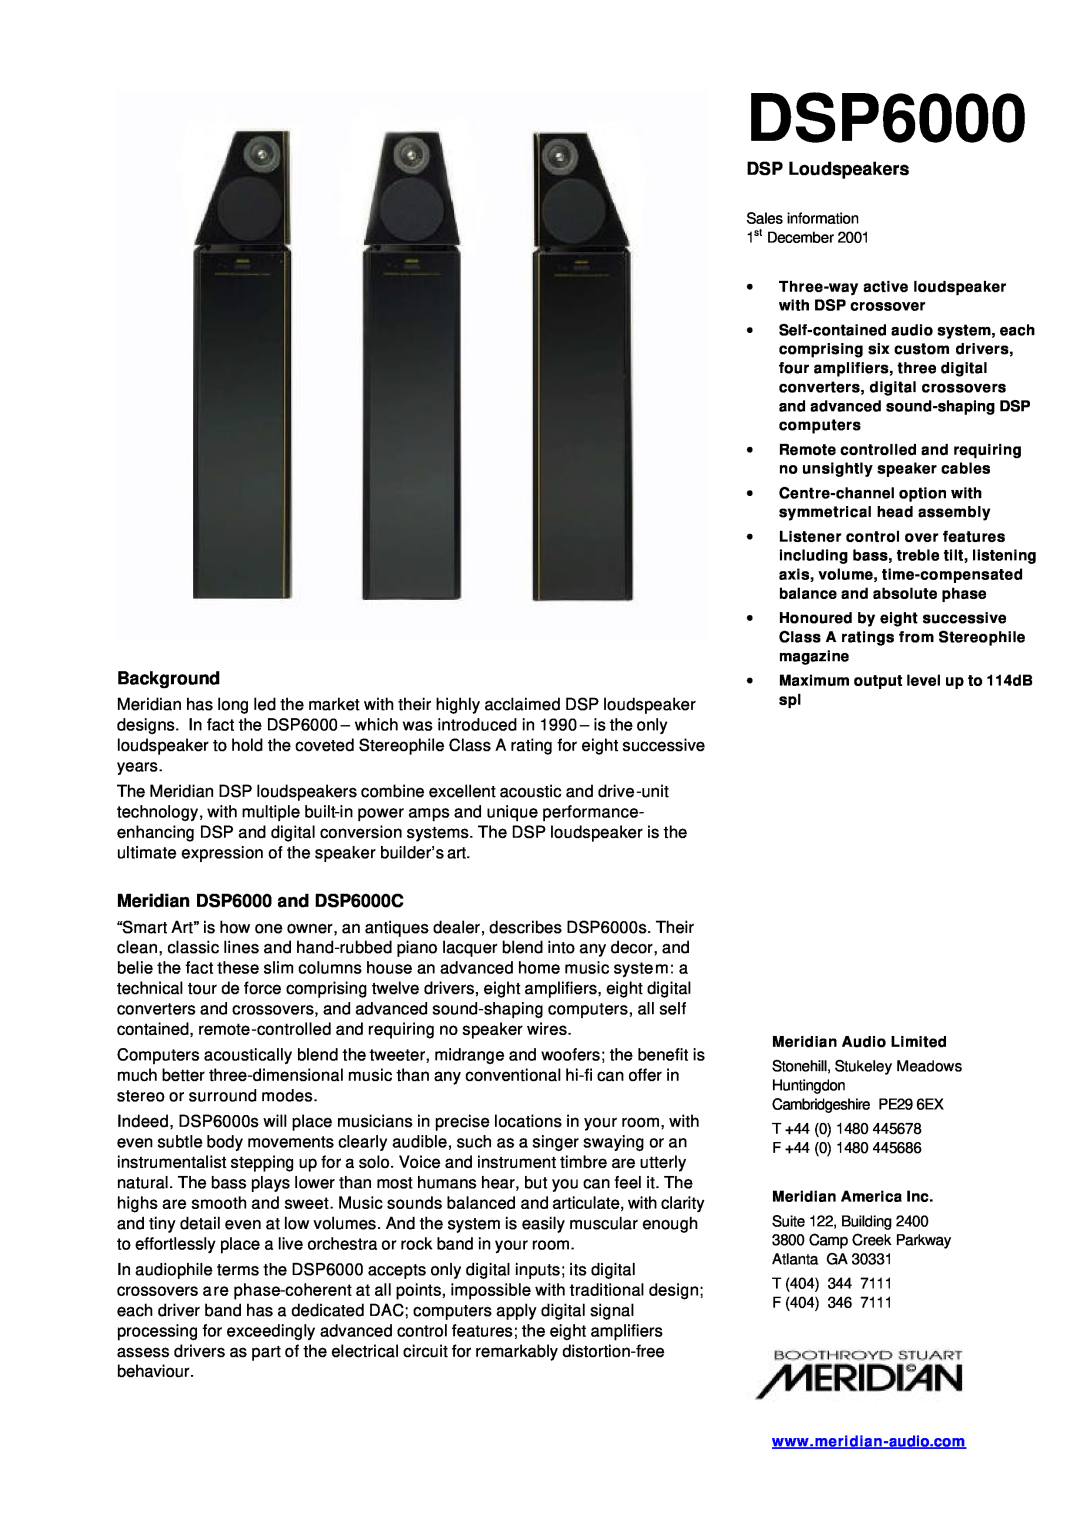 Meridian America manual Background, Meridian DSP6000 and DSP6000C, DSP Loudspeakers 